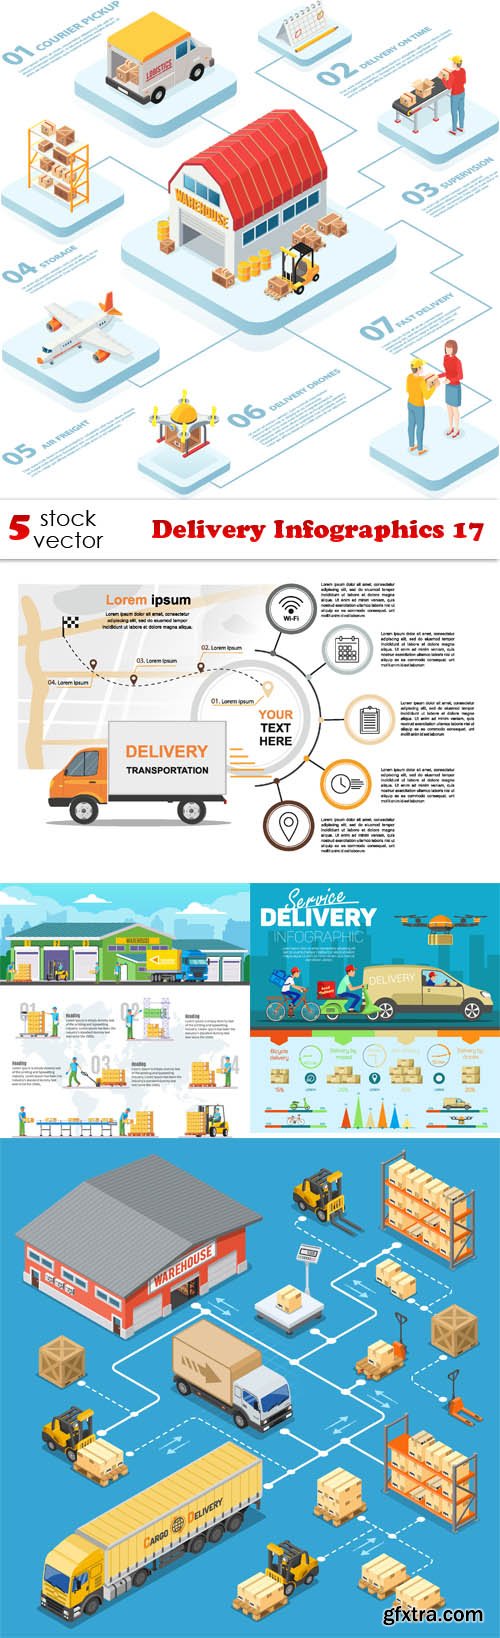 Vectors - Delivery Infographics 17